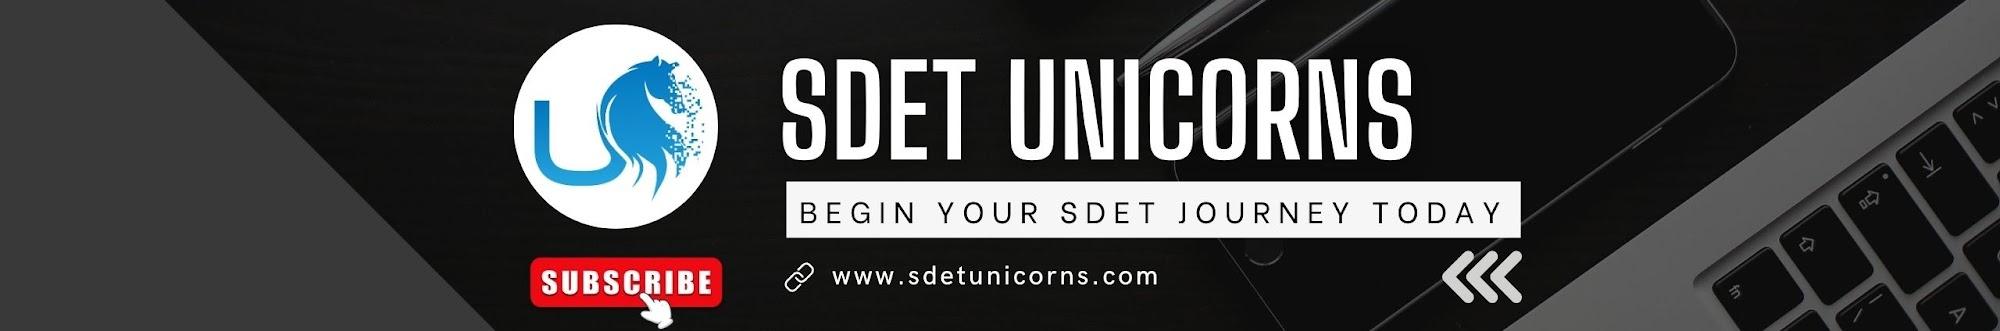 SDET Unicorns by Dilpreet Johal